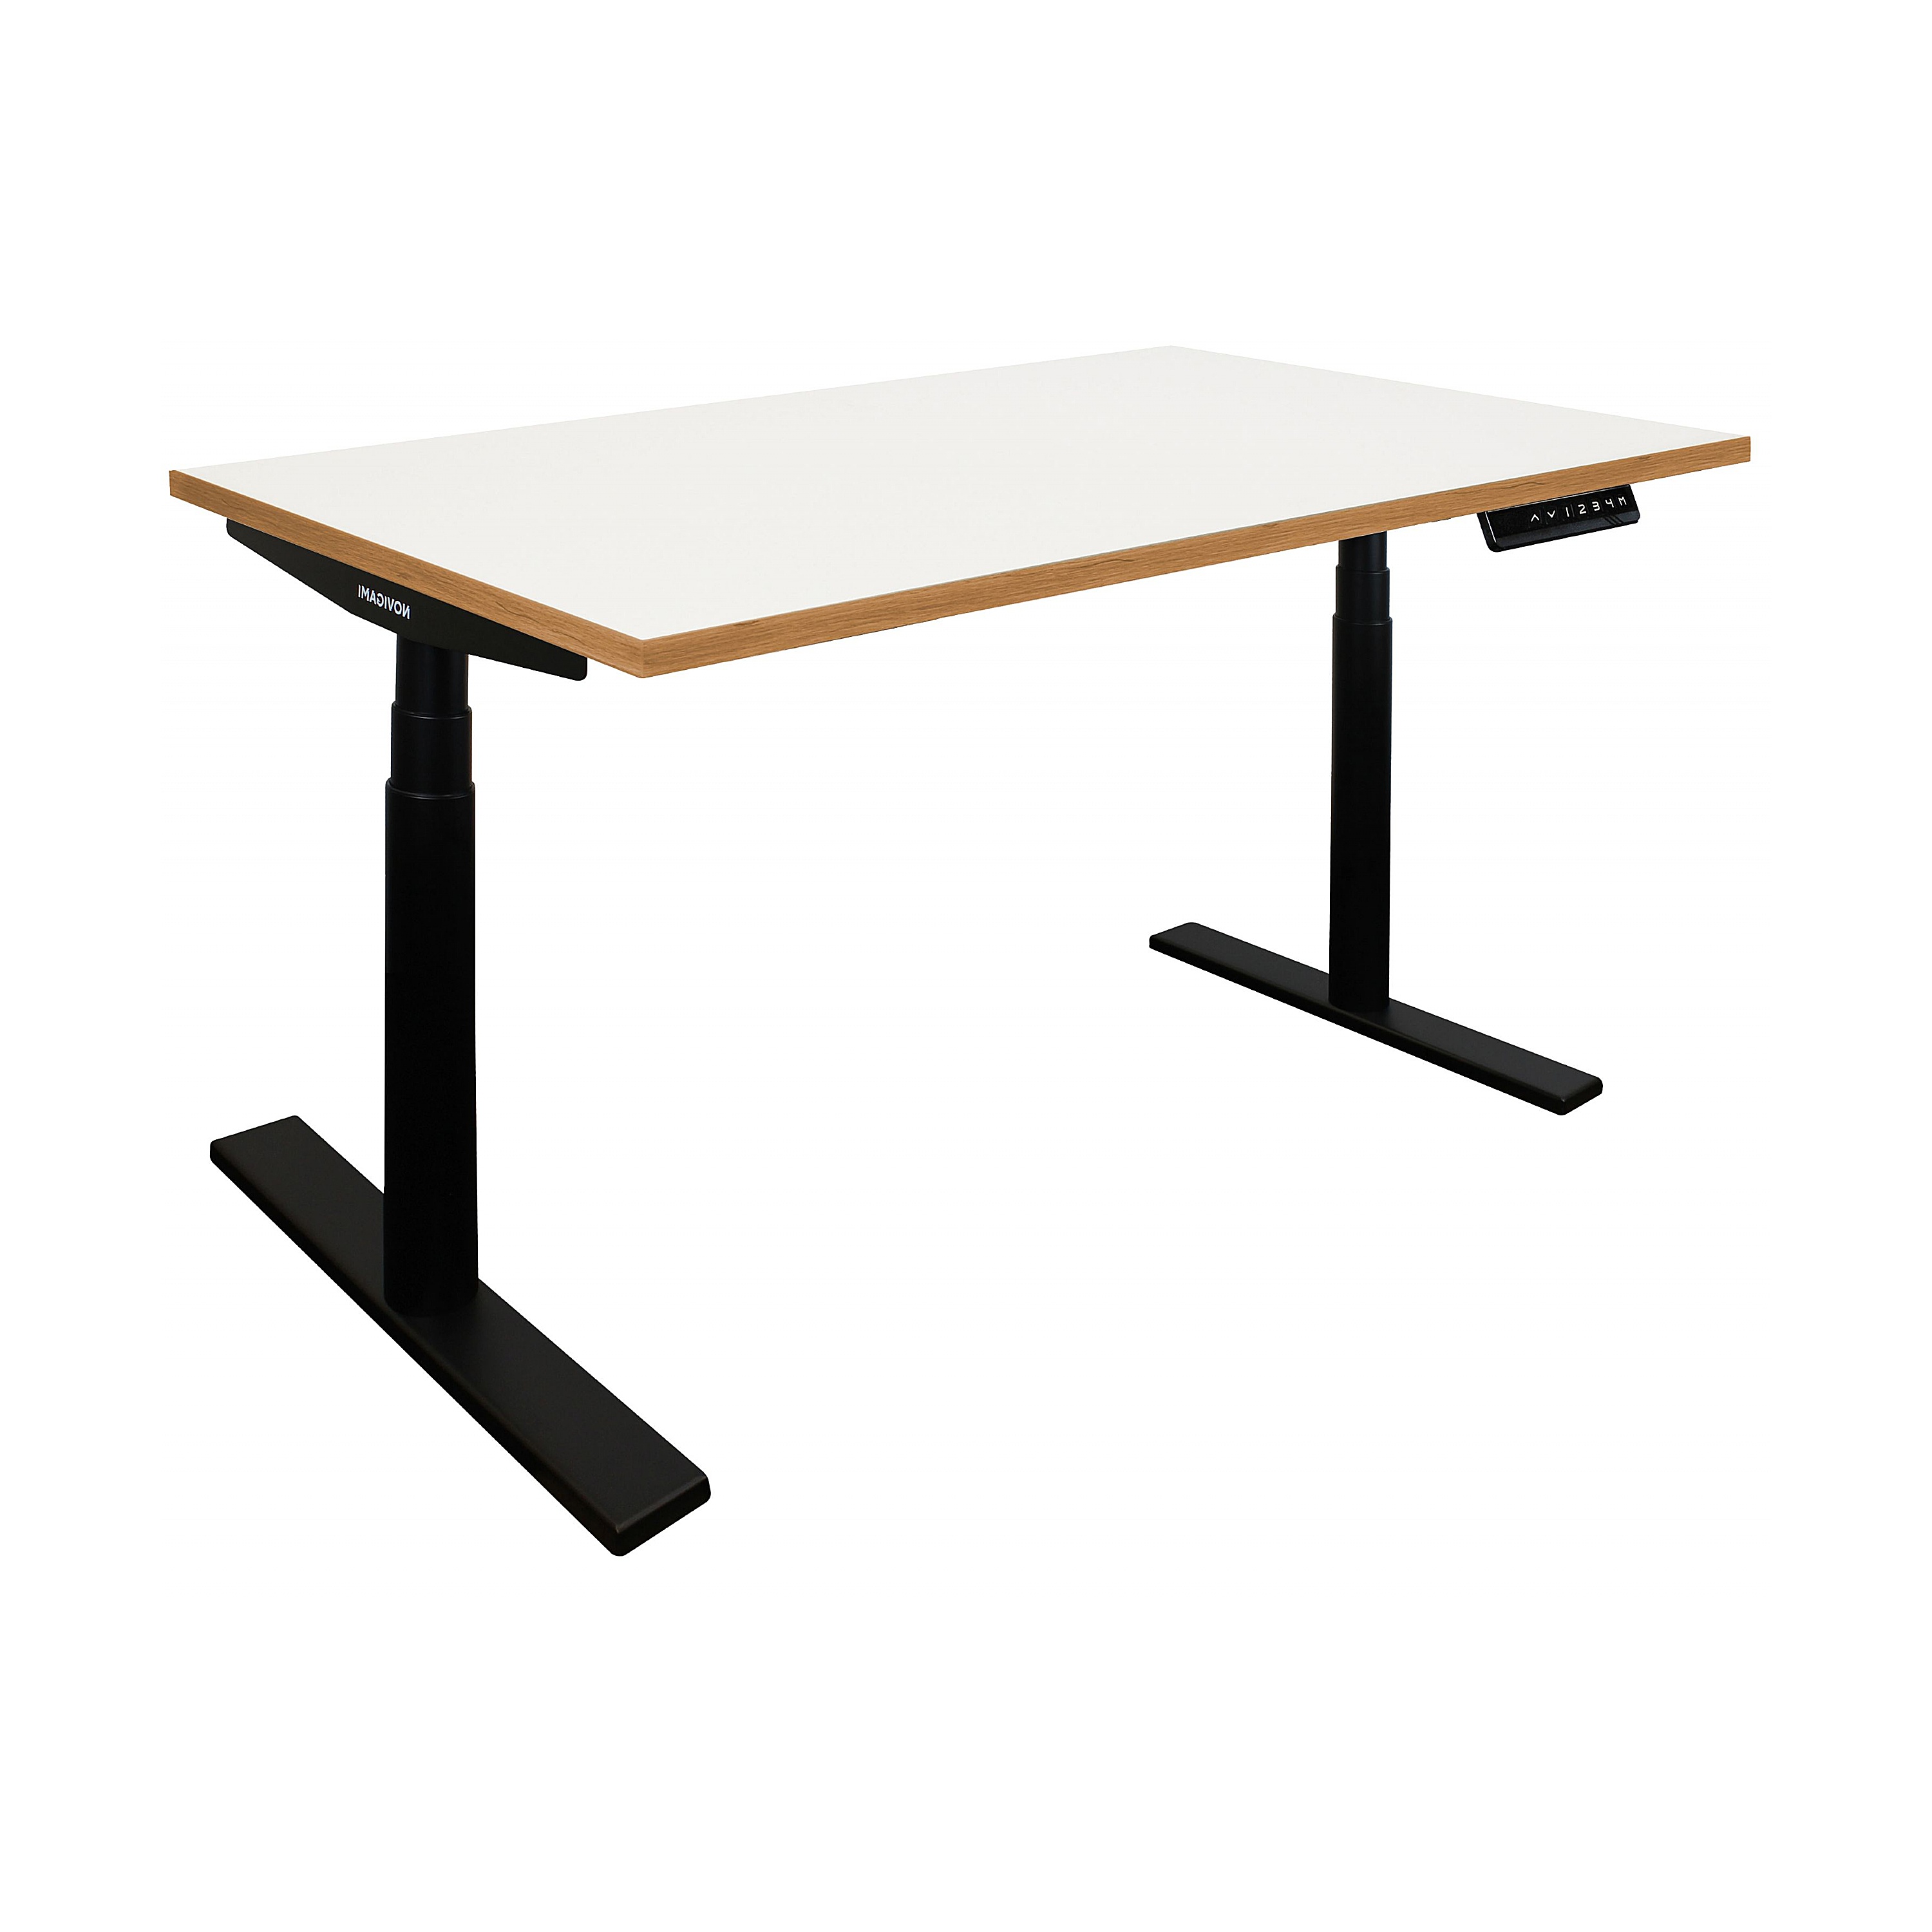 Vertilift Height Adjustable Desk